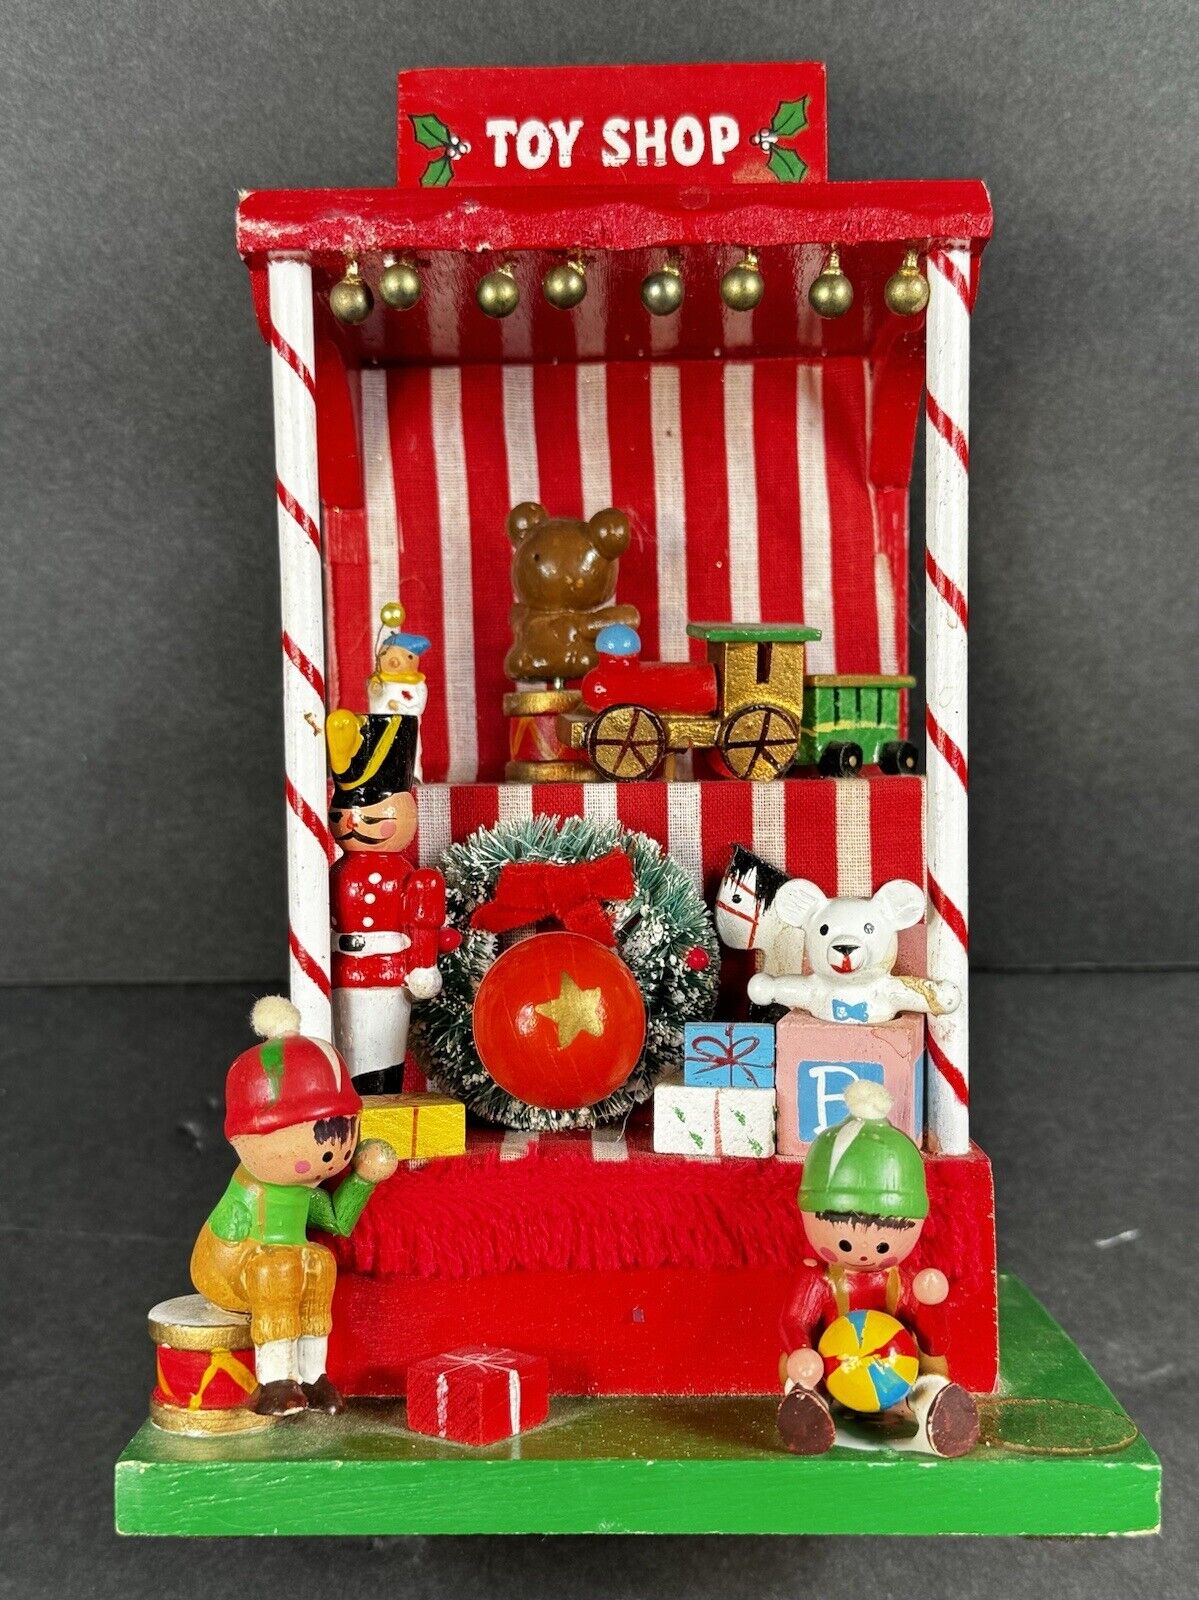 1983 Enesco Musical Toy Shop Christmas Decoration  